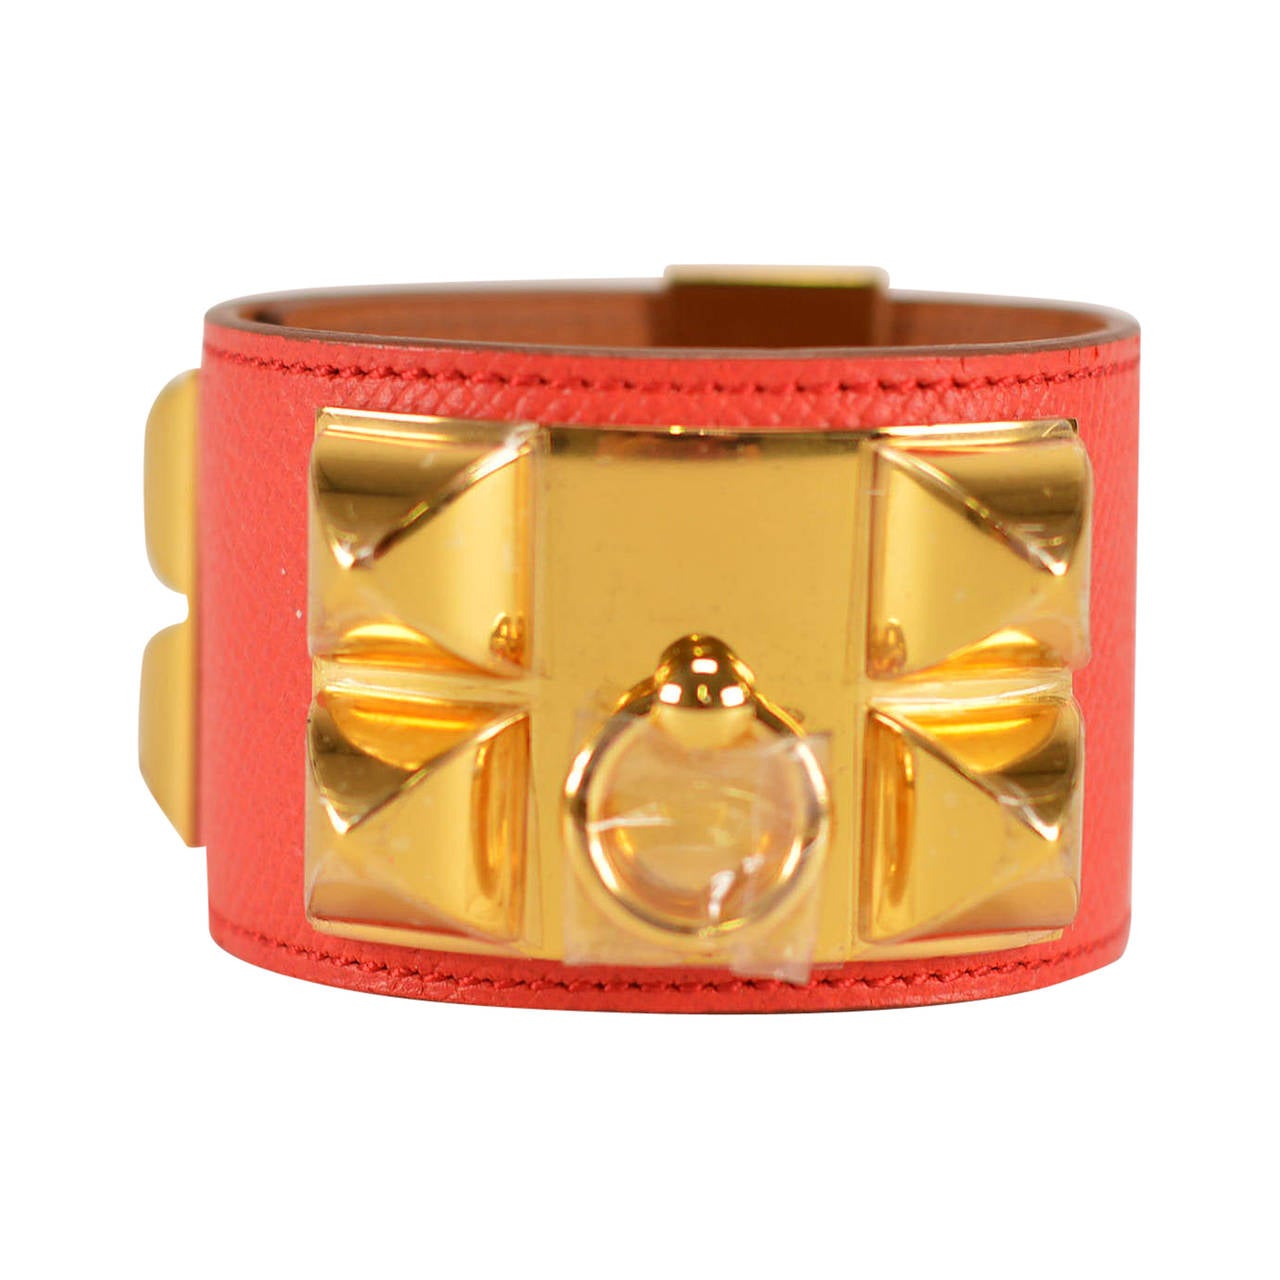 HERMES Bracelet Collier de Chien S Epsom PINK JAIPUR Gold Hardware 2015.